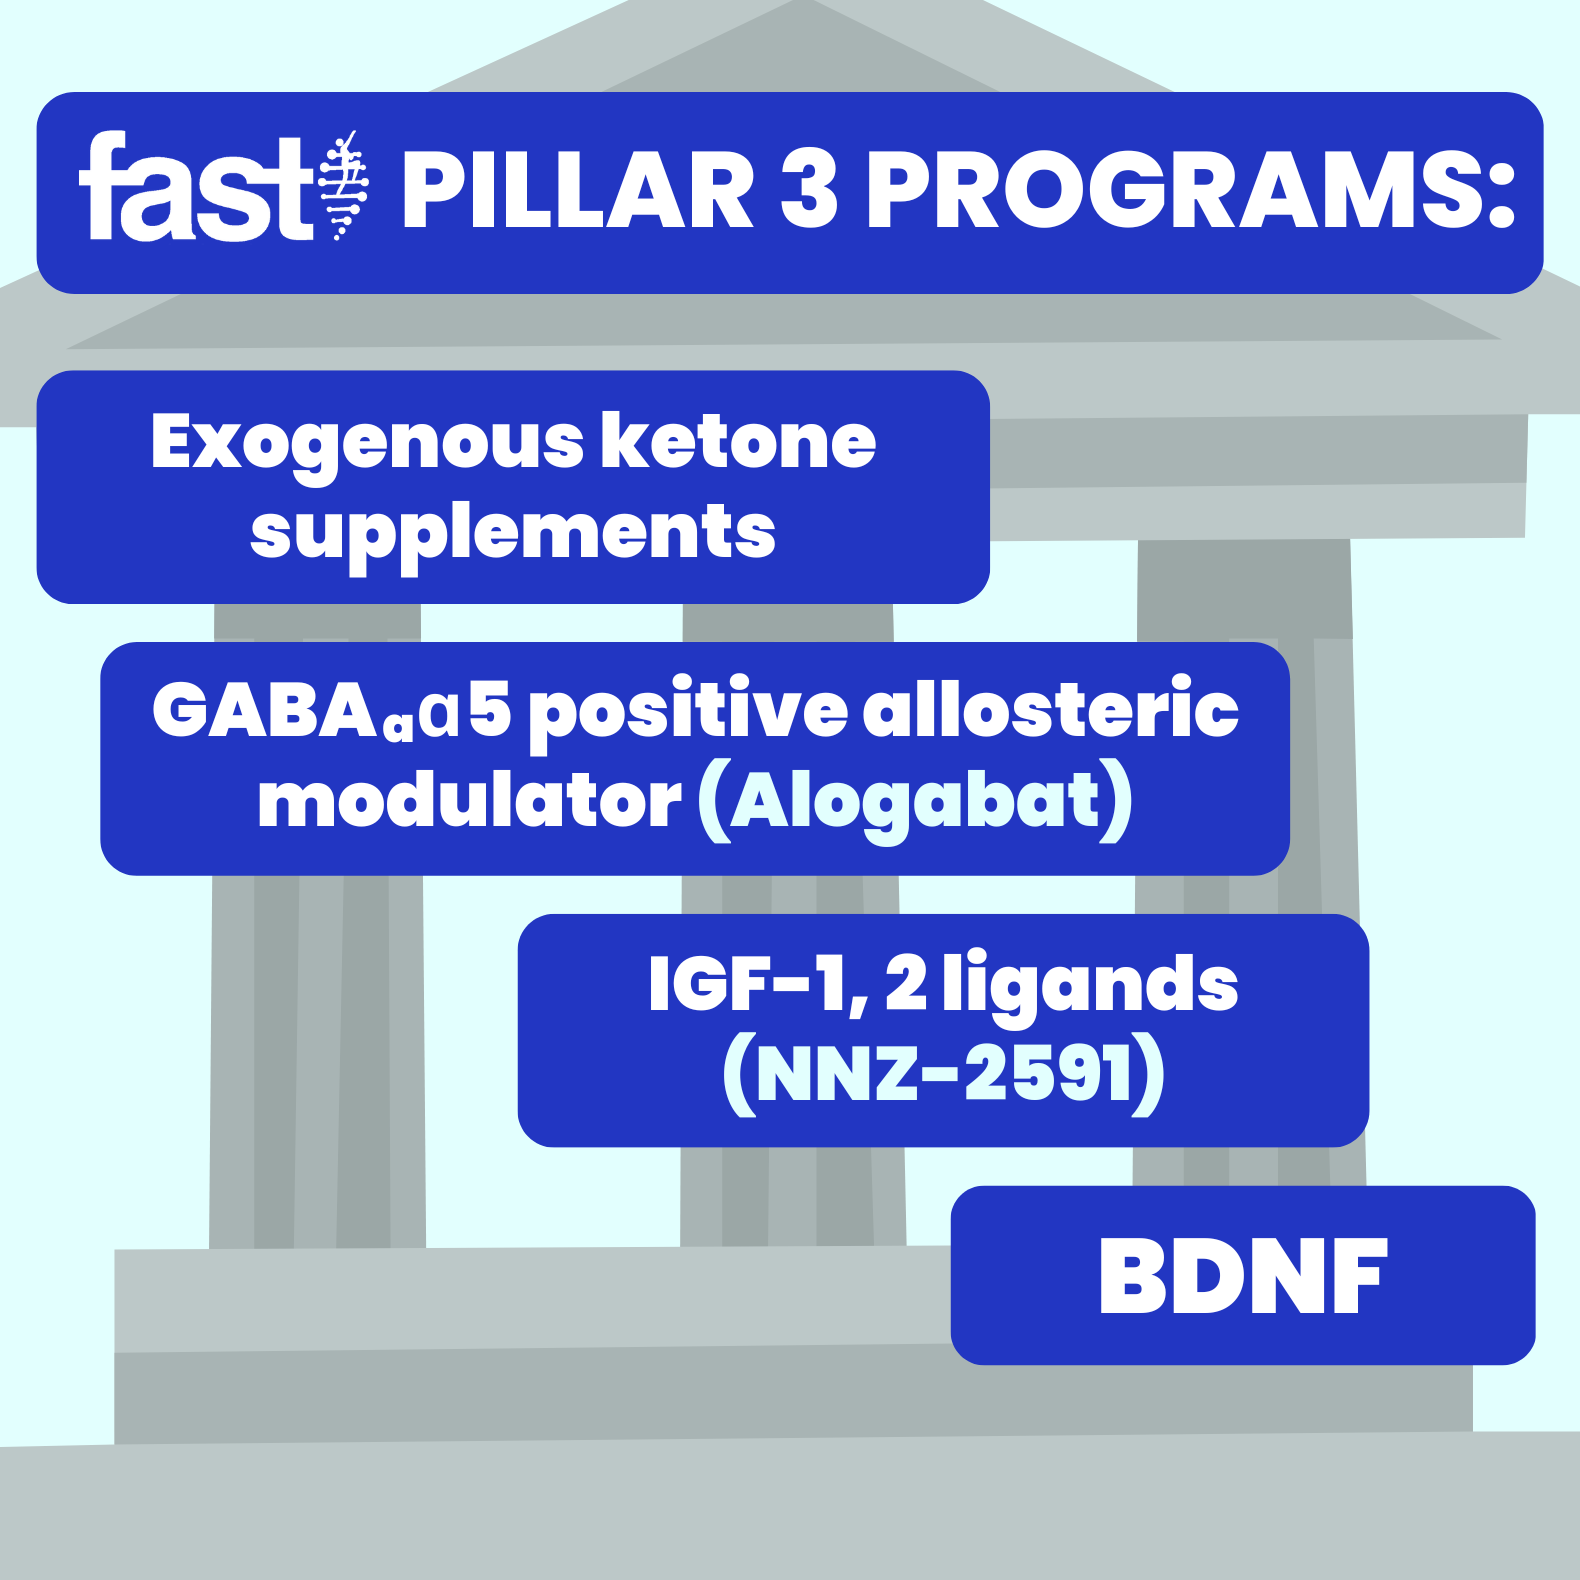 Pillar 3 programs: Exogenous ketone supplements, GABAaɑ5 positive allosteric modulator (Alogabat), IGF-1, 2 ligands (NNZ-2591), BDNF, in front of a building with three pillars